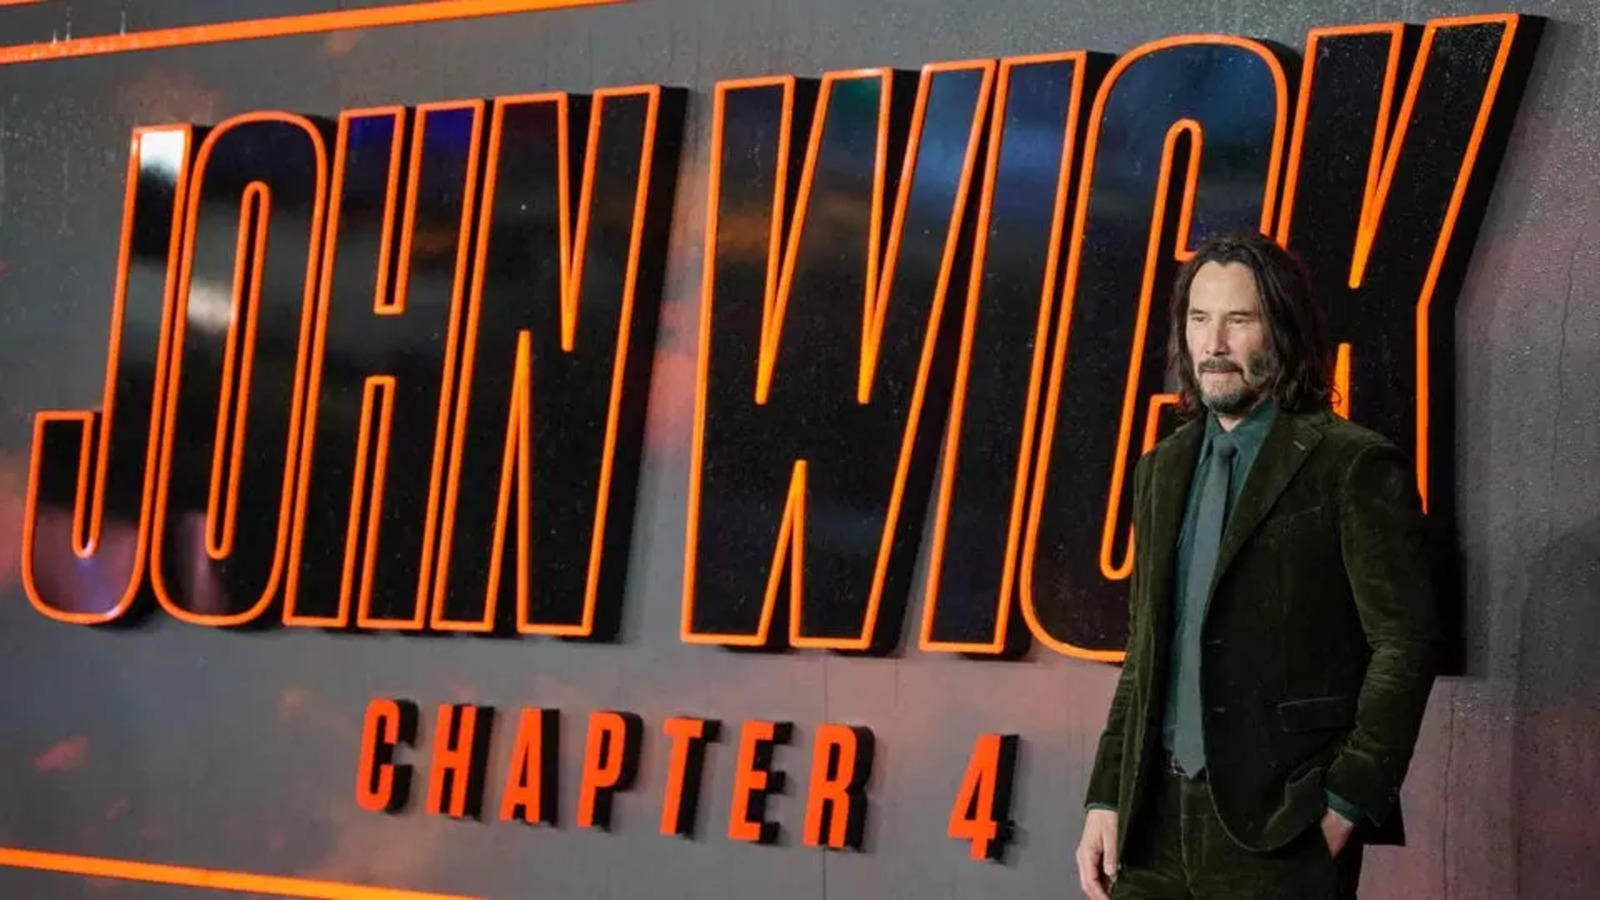 John Wick Chapter 4 2023 John Wick 4 Movie All Over Print T-shirt –